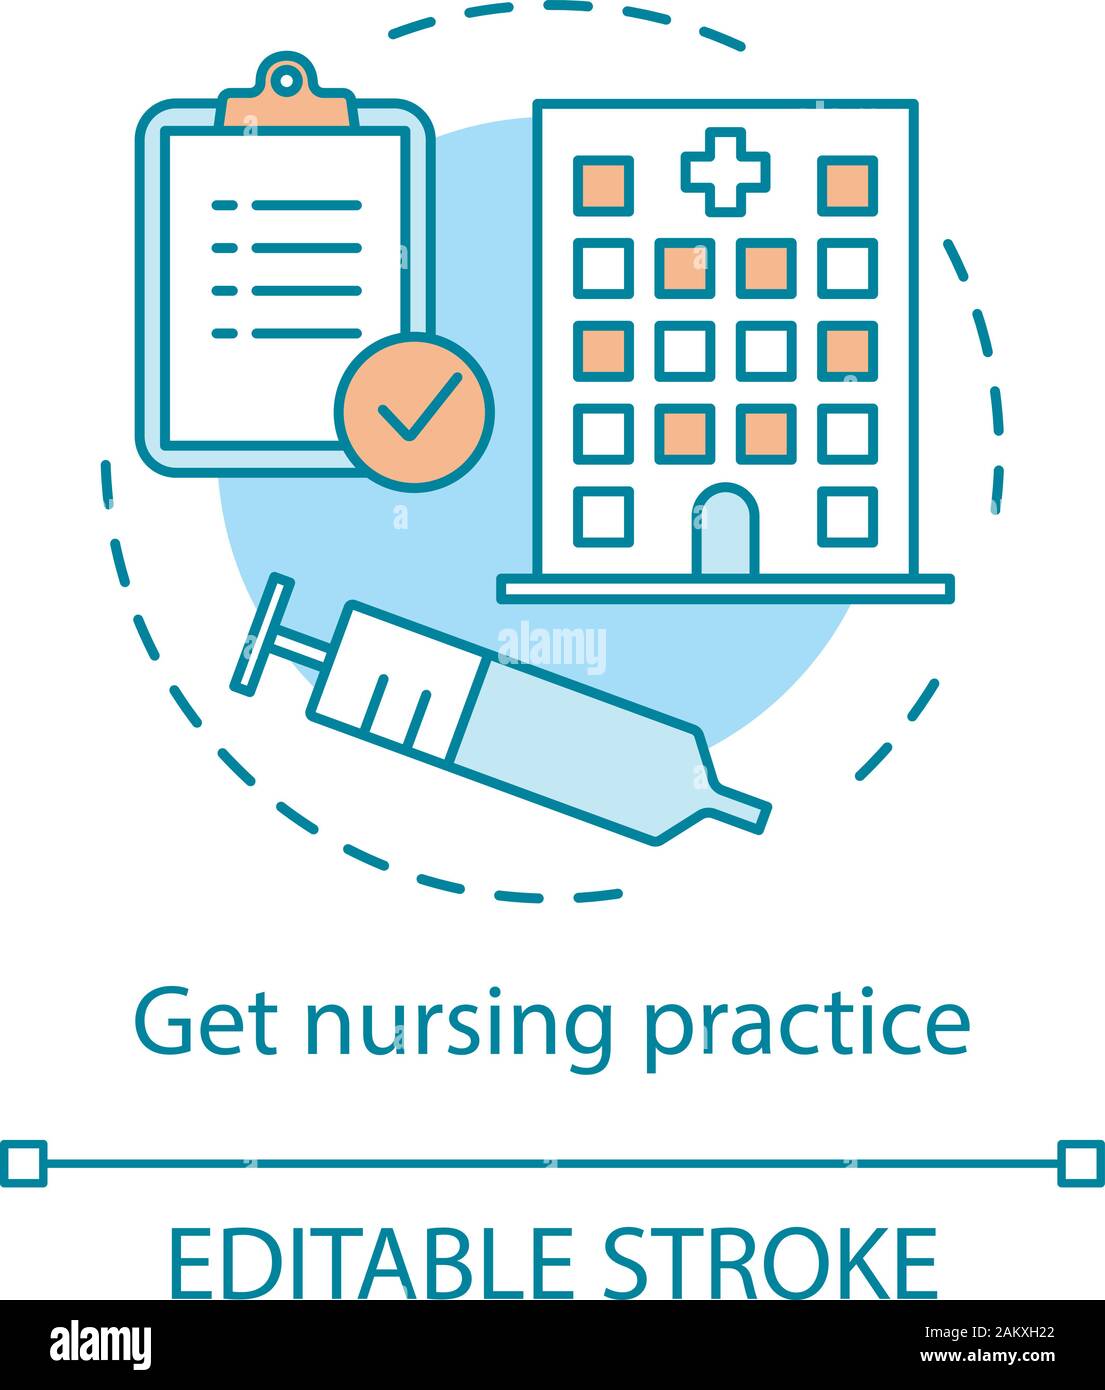 Nursing practice concept icon. Medical service idea thin line